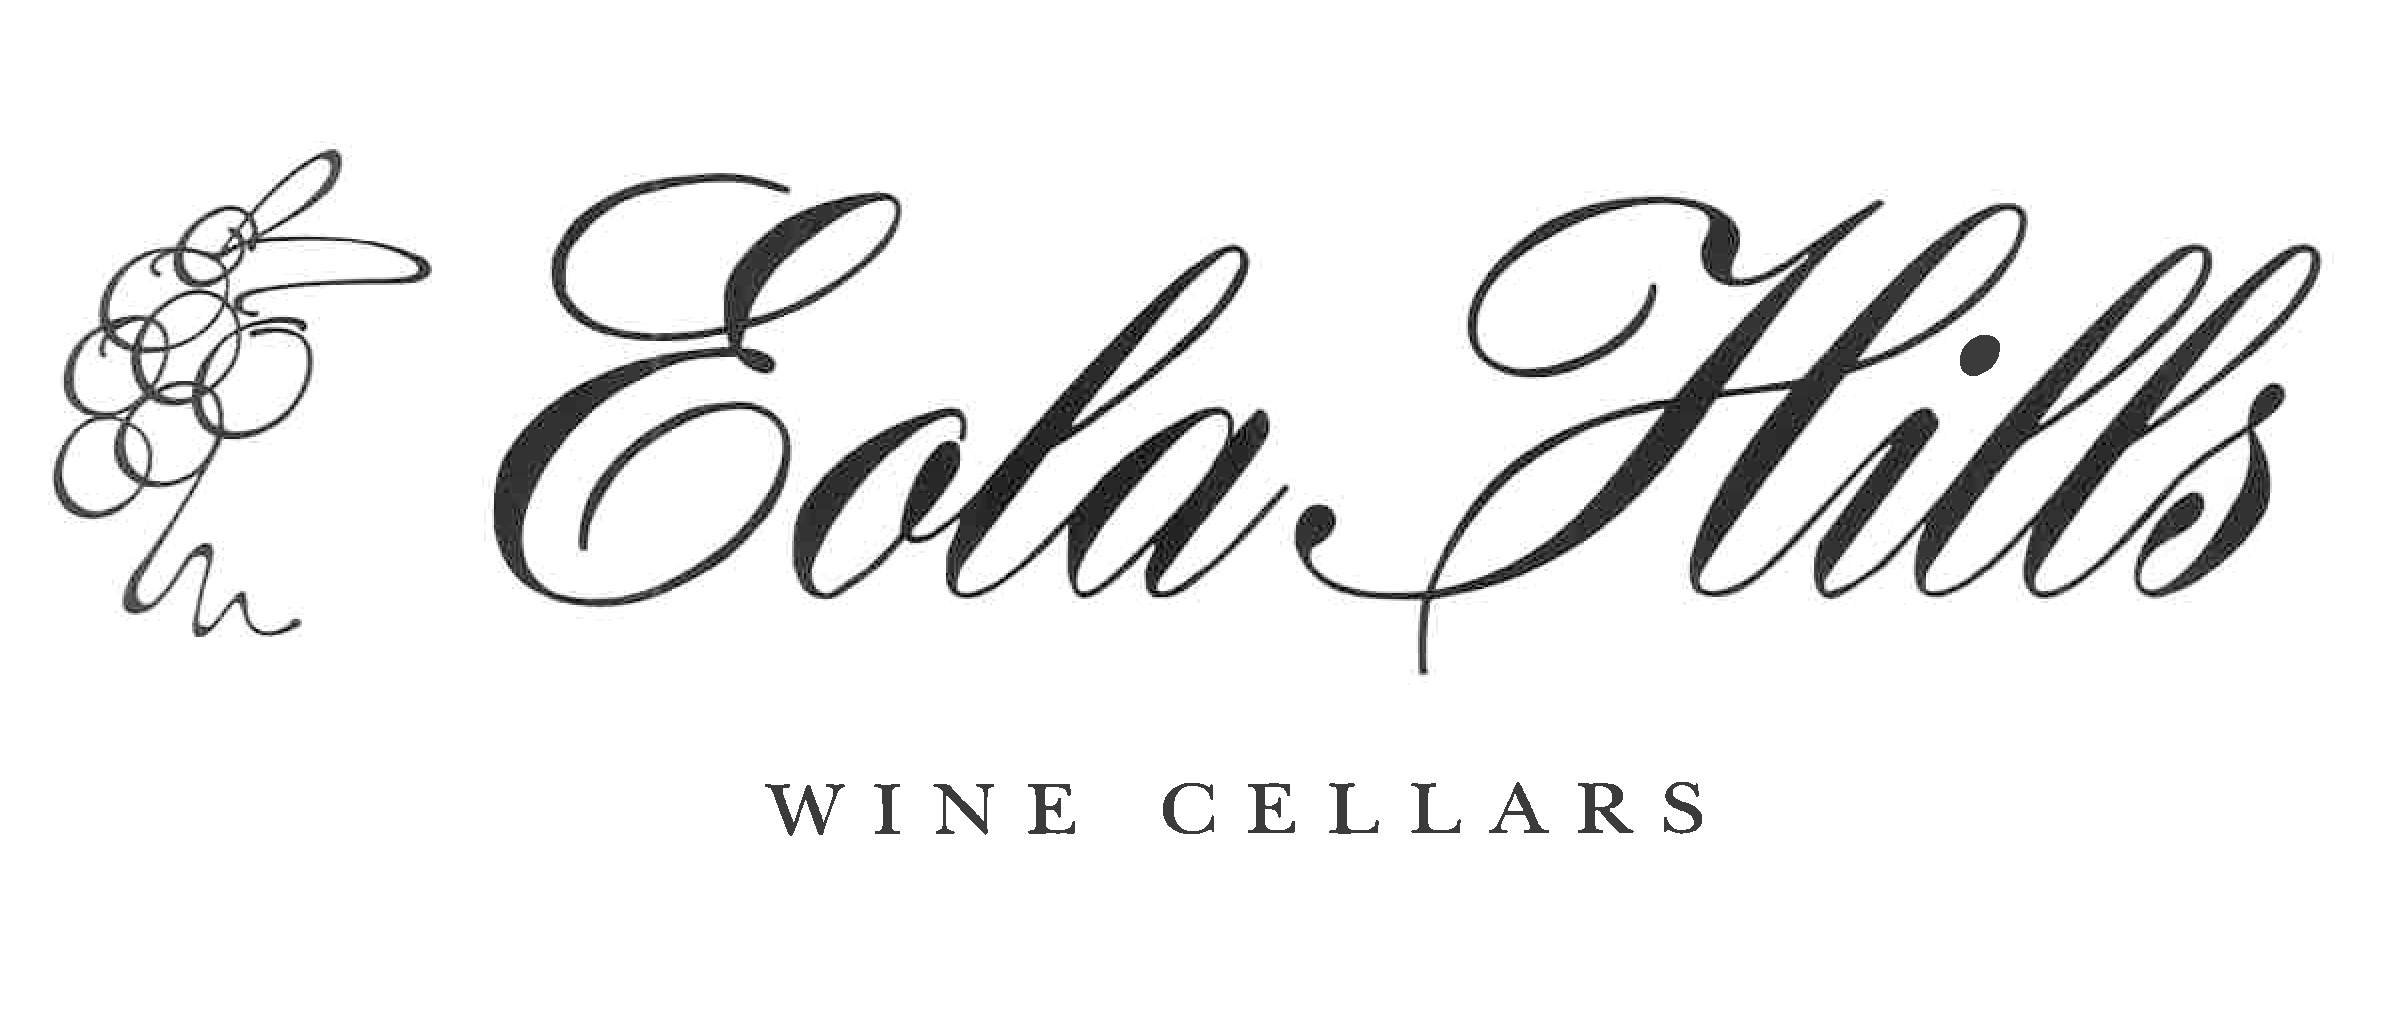 Image for Eola Hills Wine Cellars